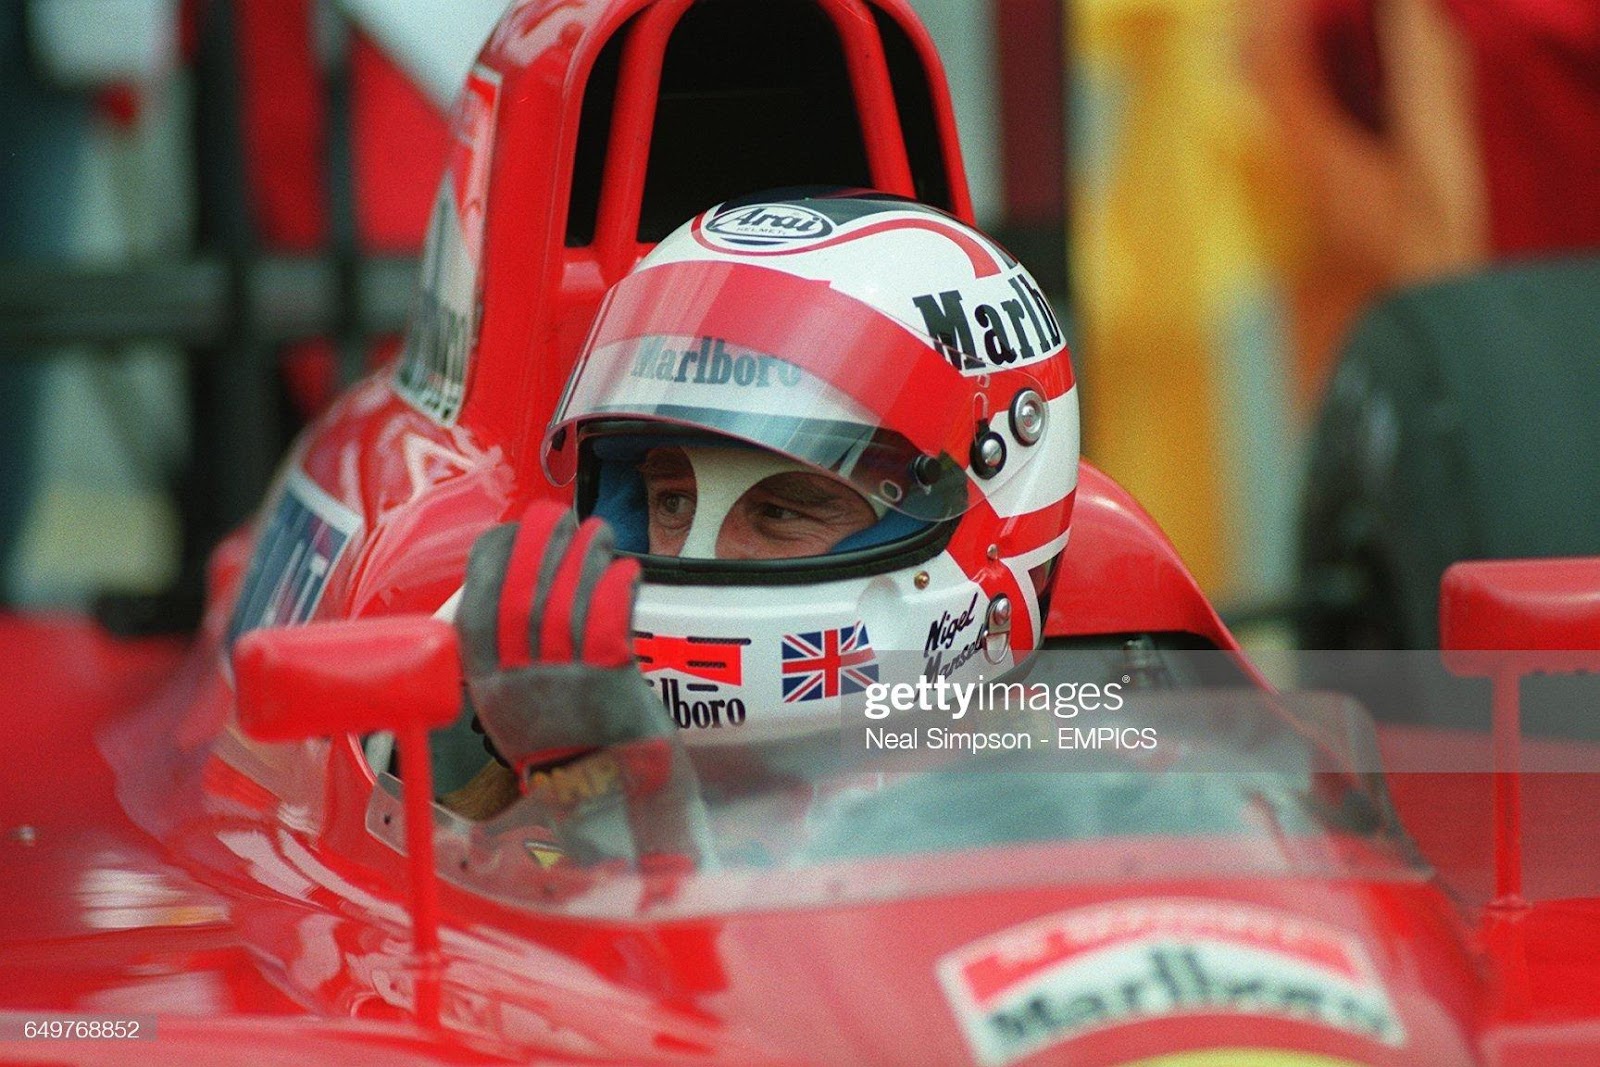 Nigel Mansell on May 01, 1990.